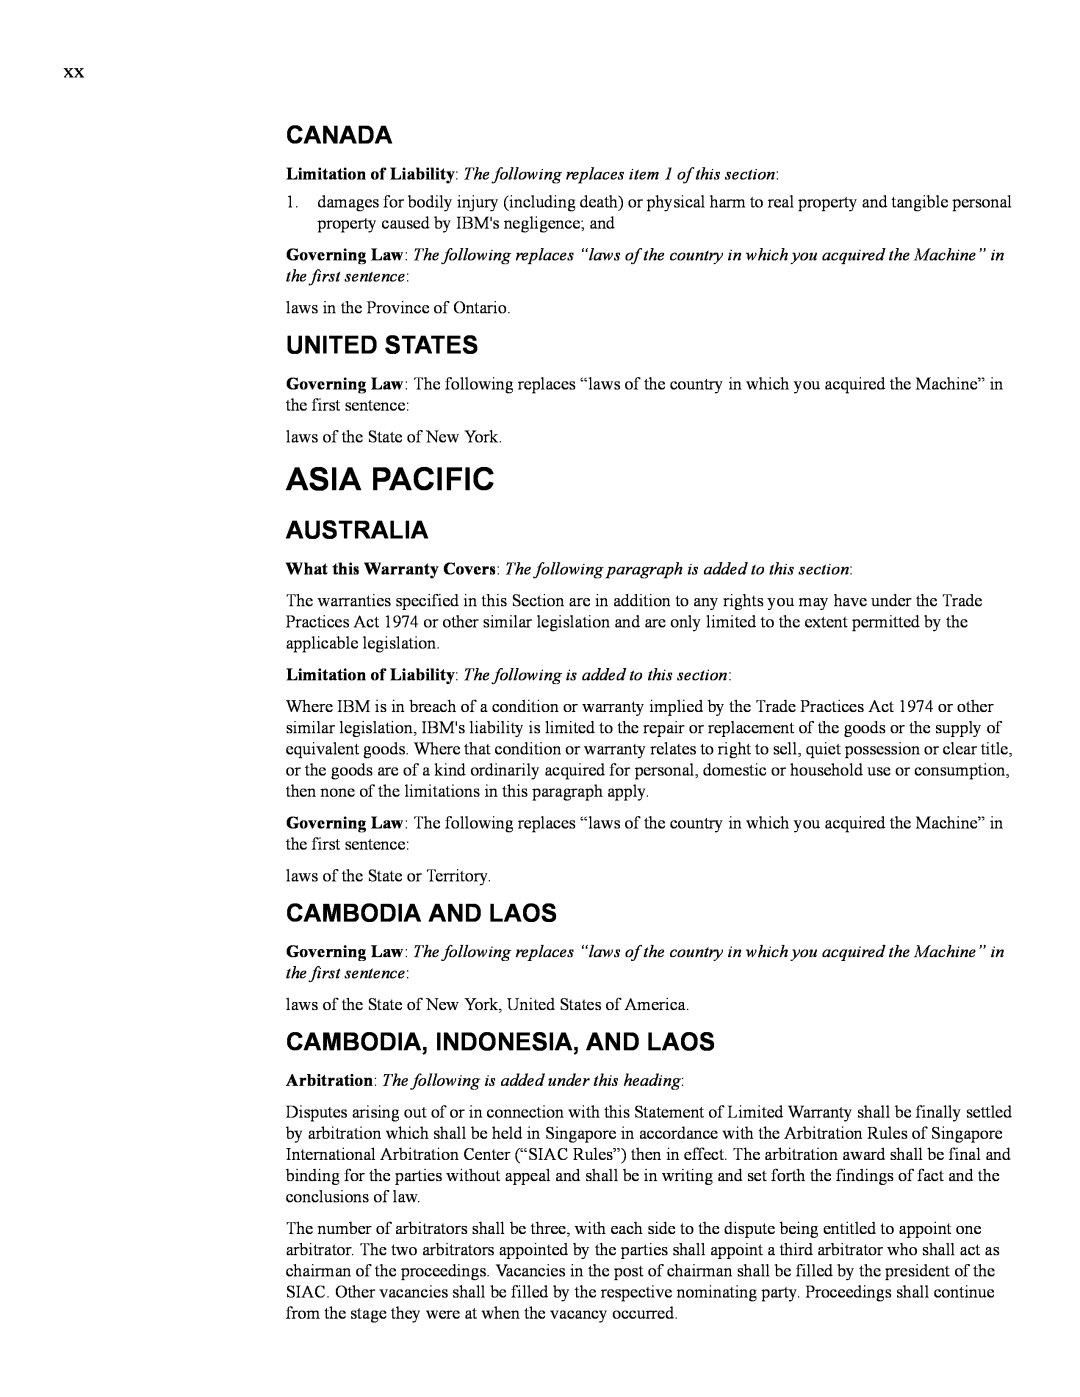 IBM 24R9718 IB manual Asia Pacific, Canada, United States, Australia, Cambodia And Laos, Cambodia, Indonesia, And Laos 